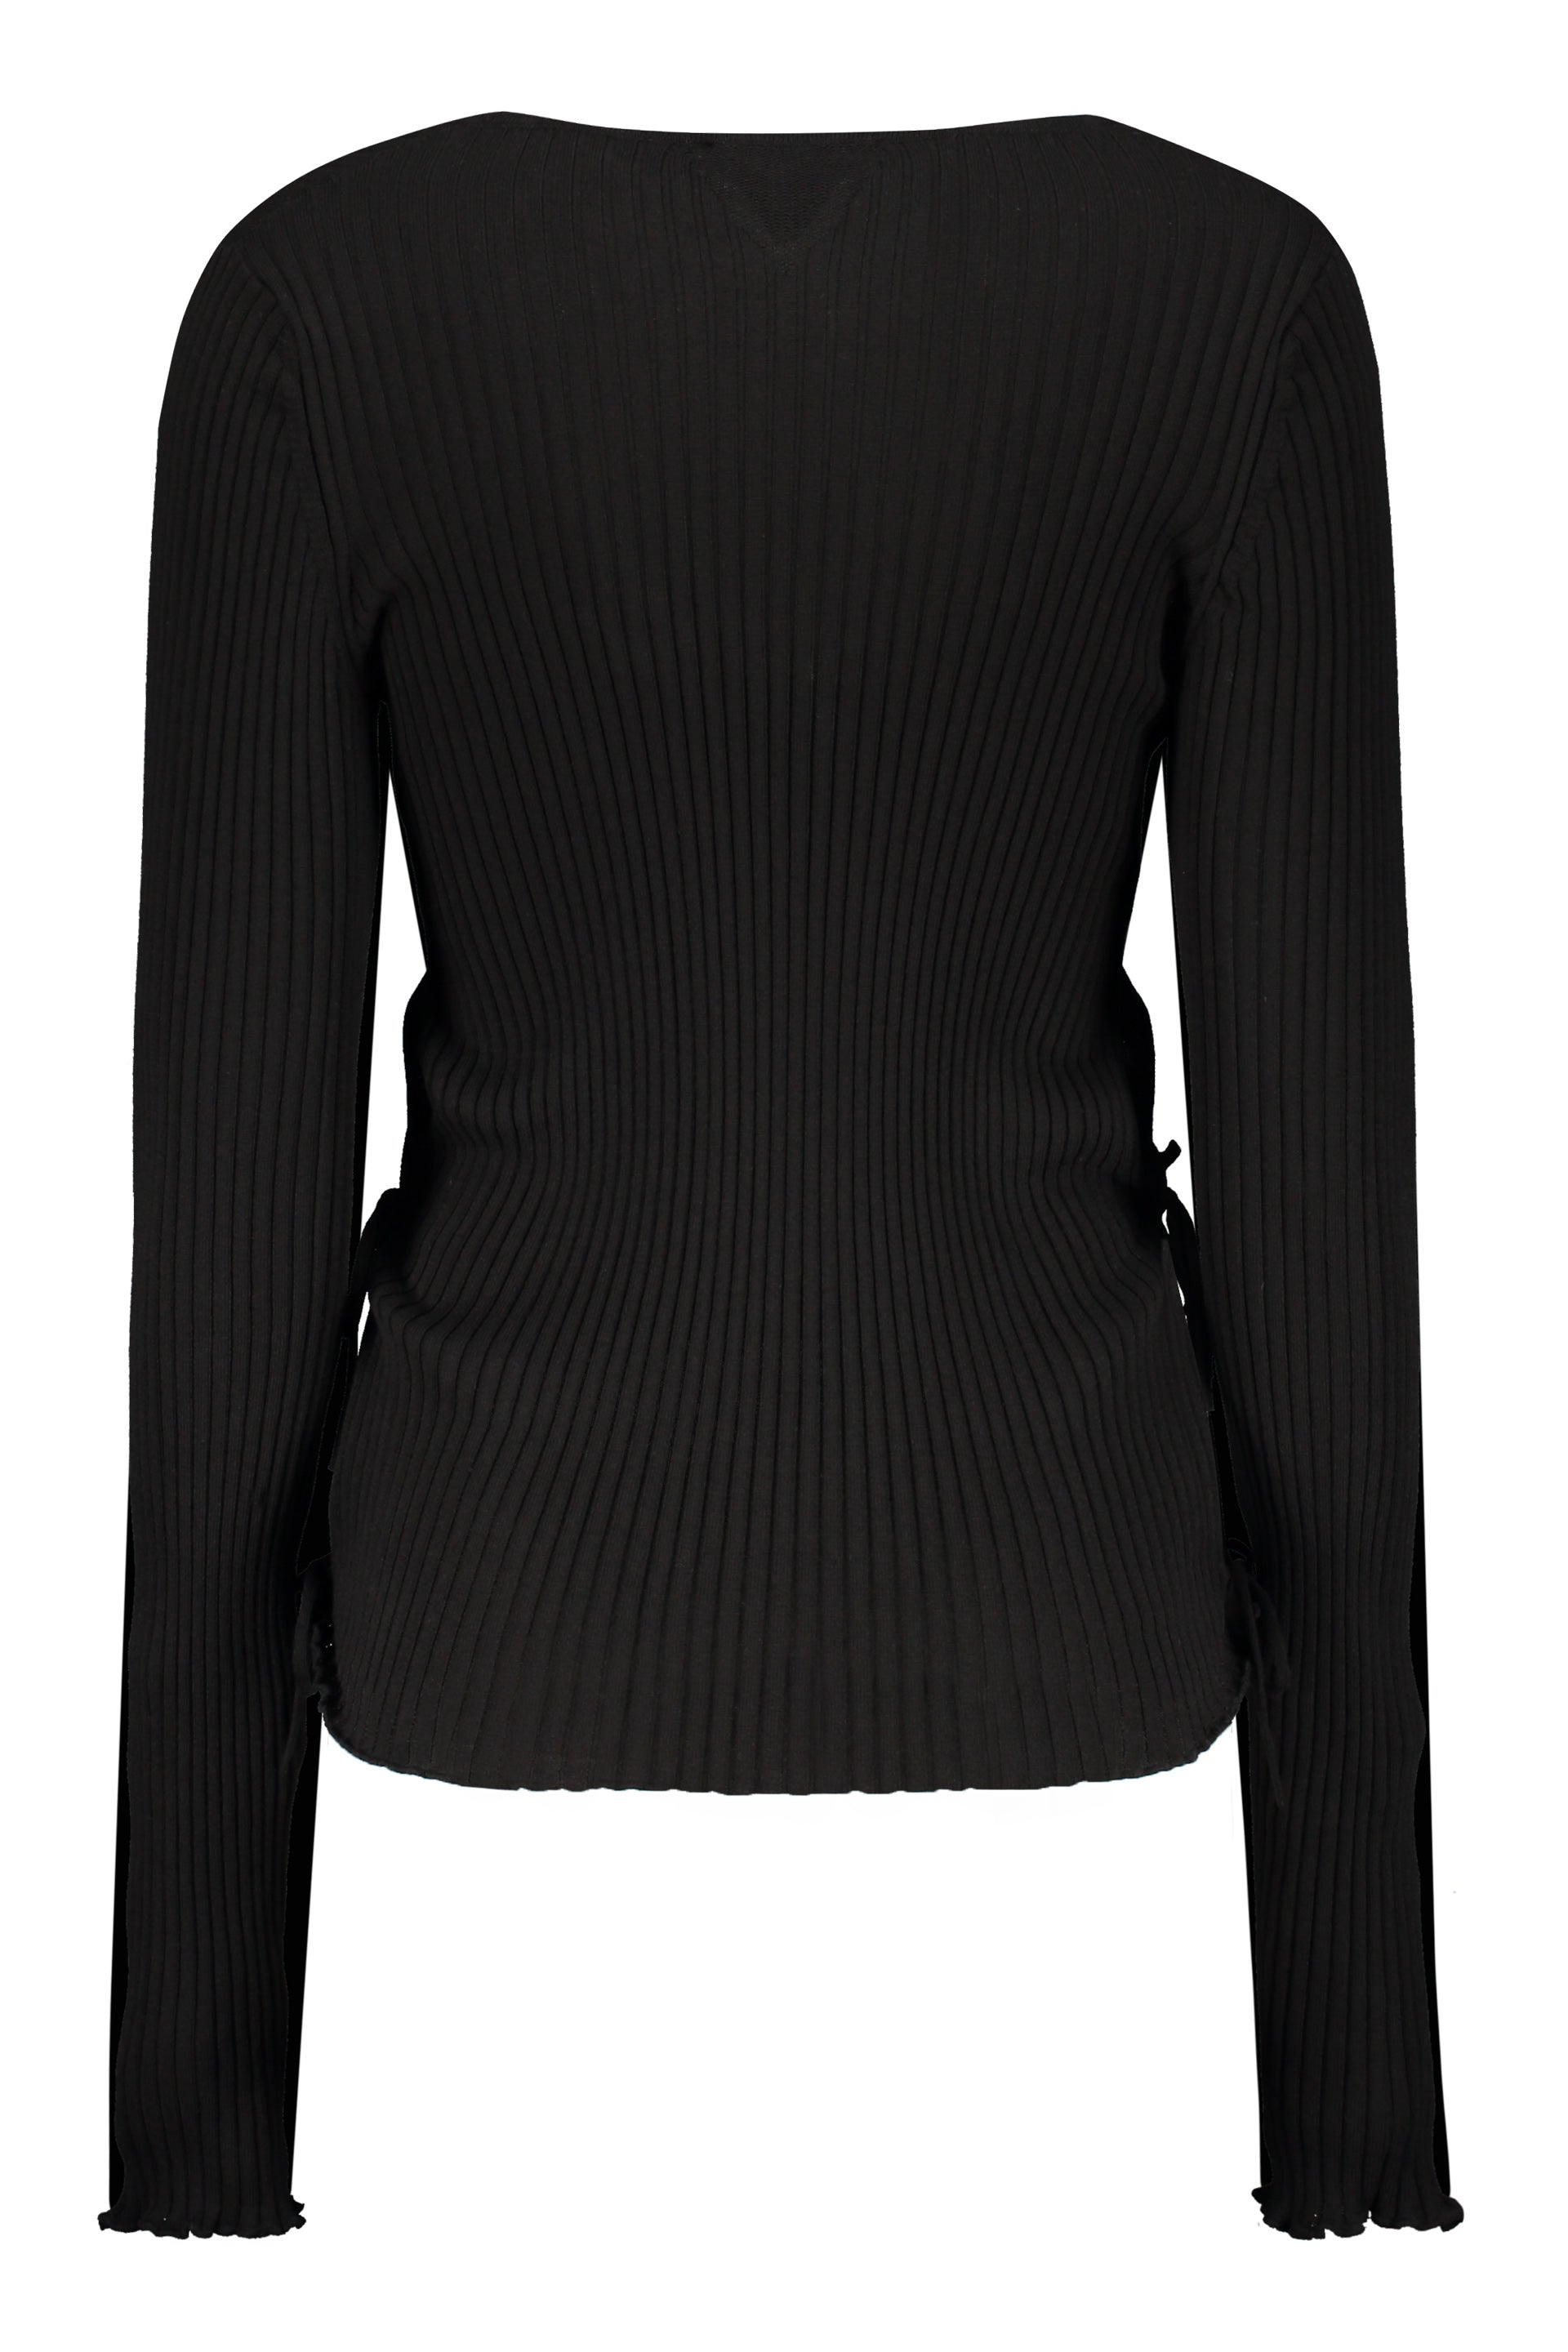 Cotton V-neck sweater-Bottega Veneta-OUTLET-SALE-ARCHIVIST